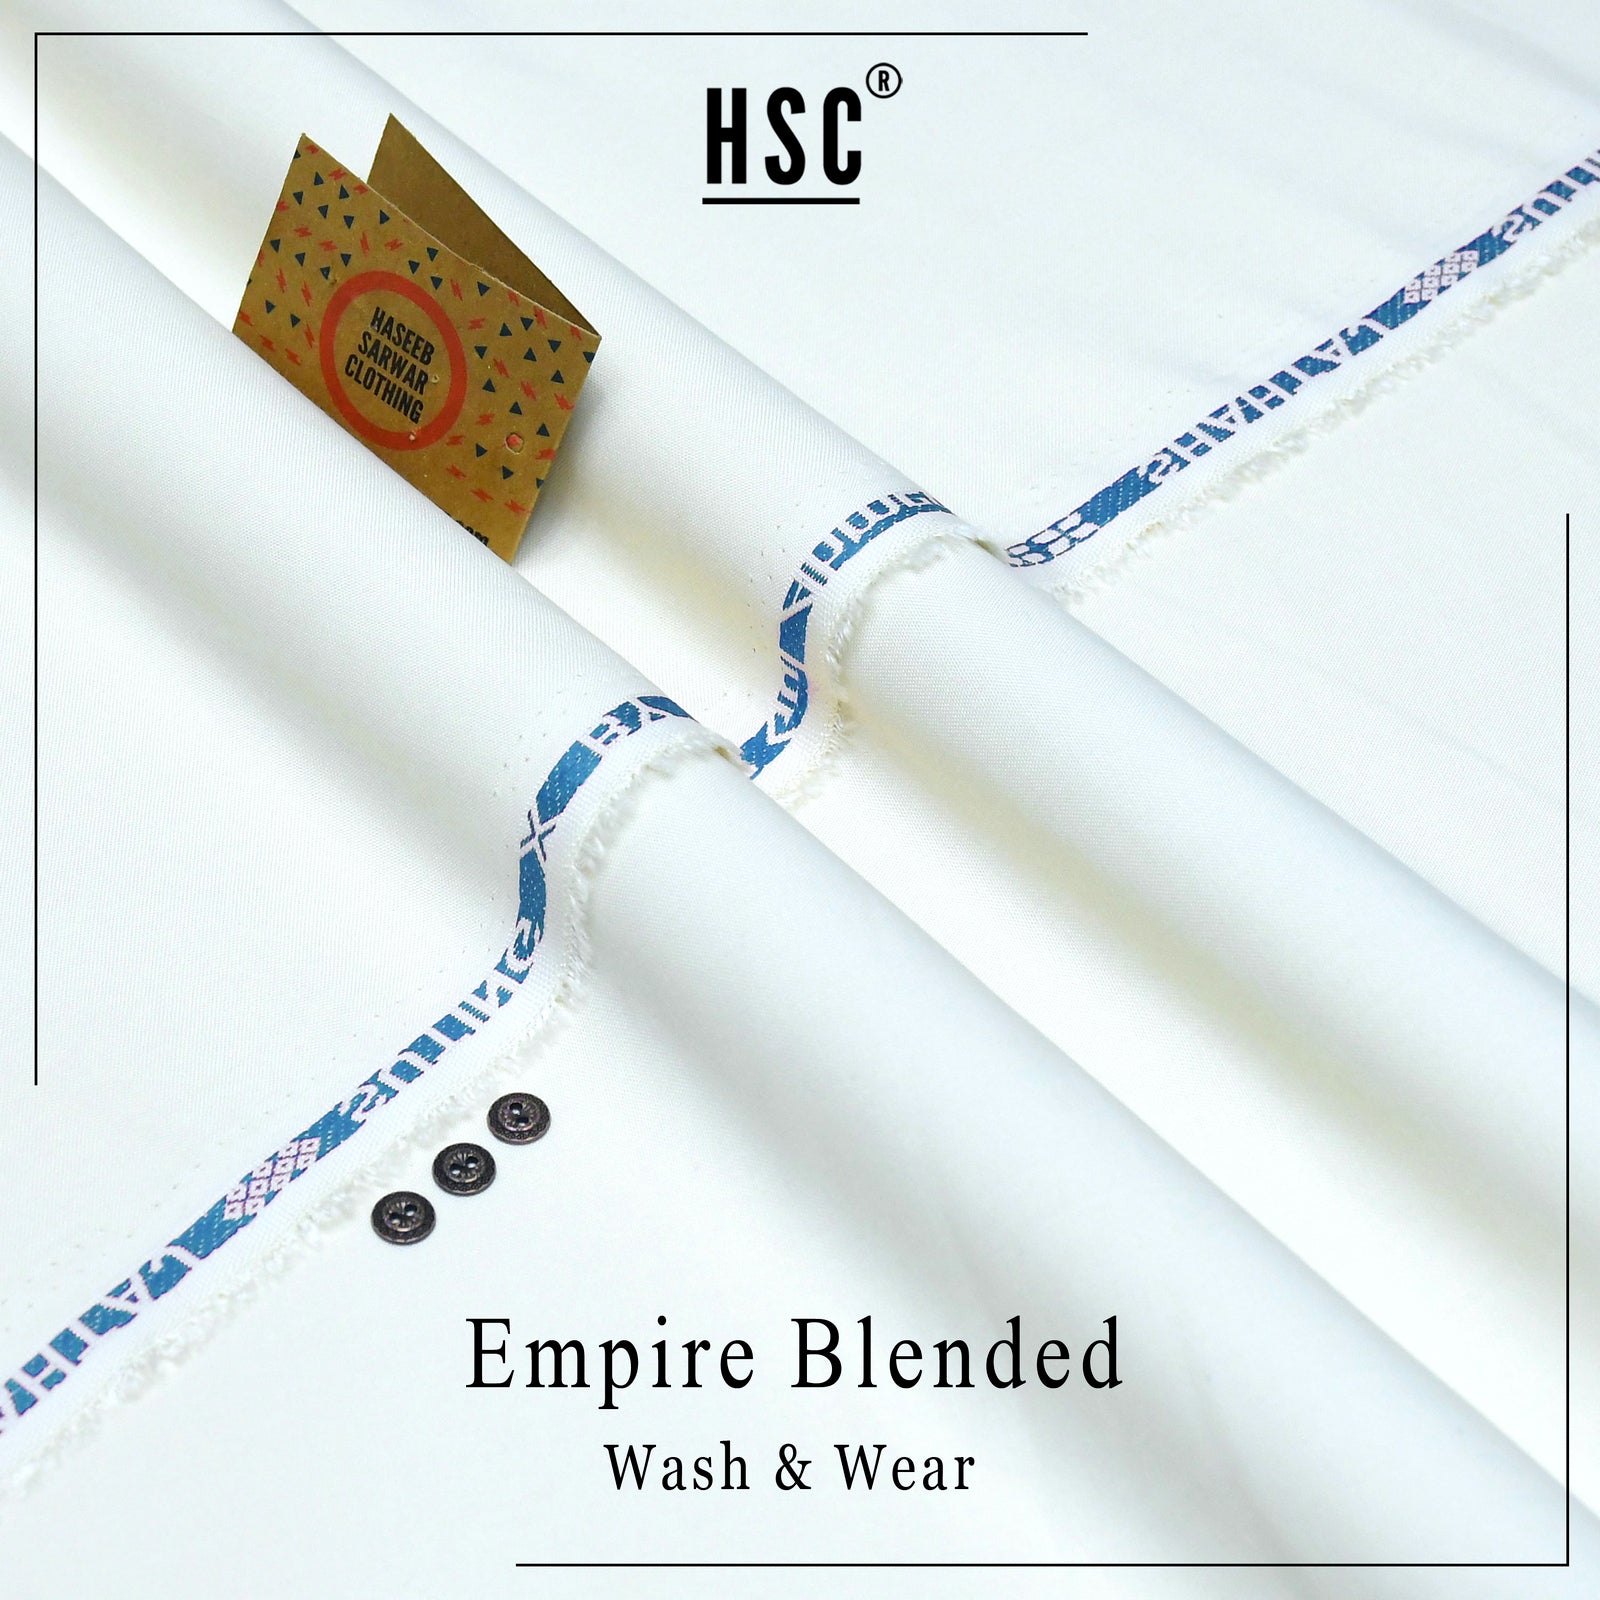 Buy 1 Get 1 Free Empire Blended Wash&Wear - EBW17 HSC